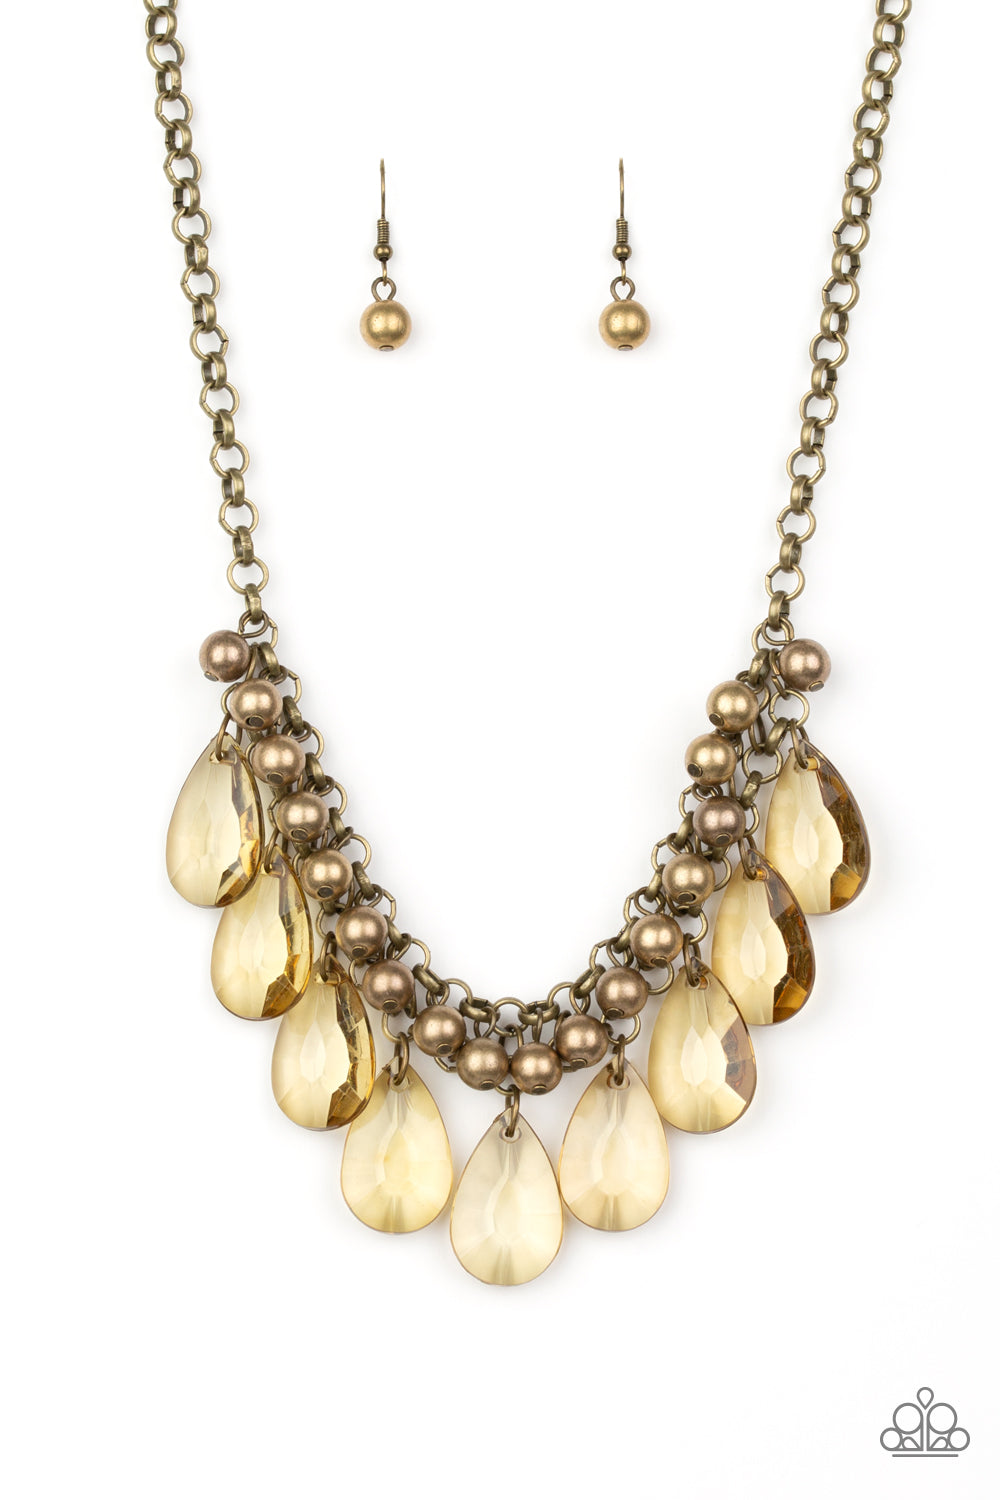 Fashionista Flair - Brass Necklace